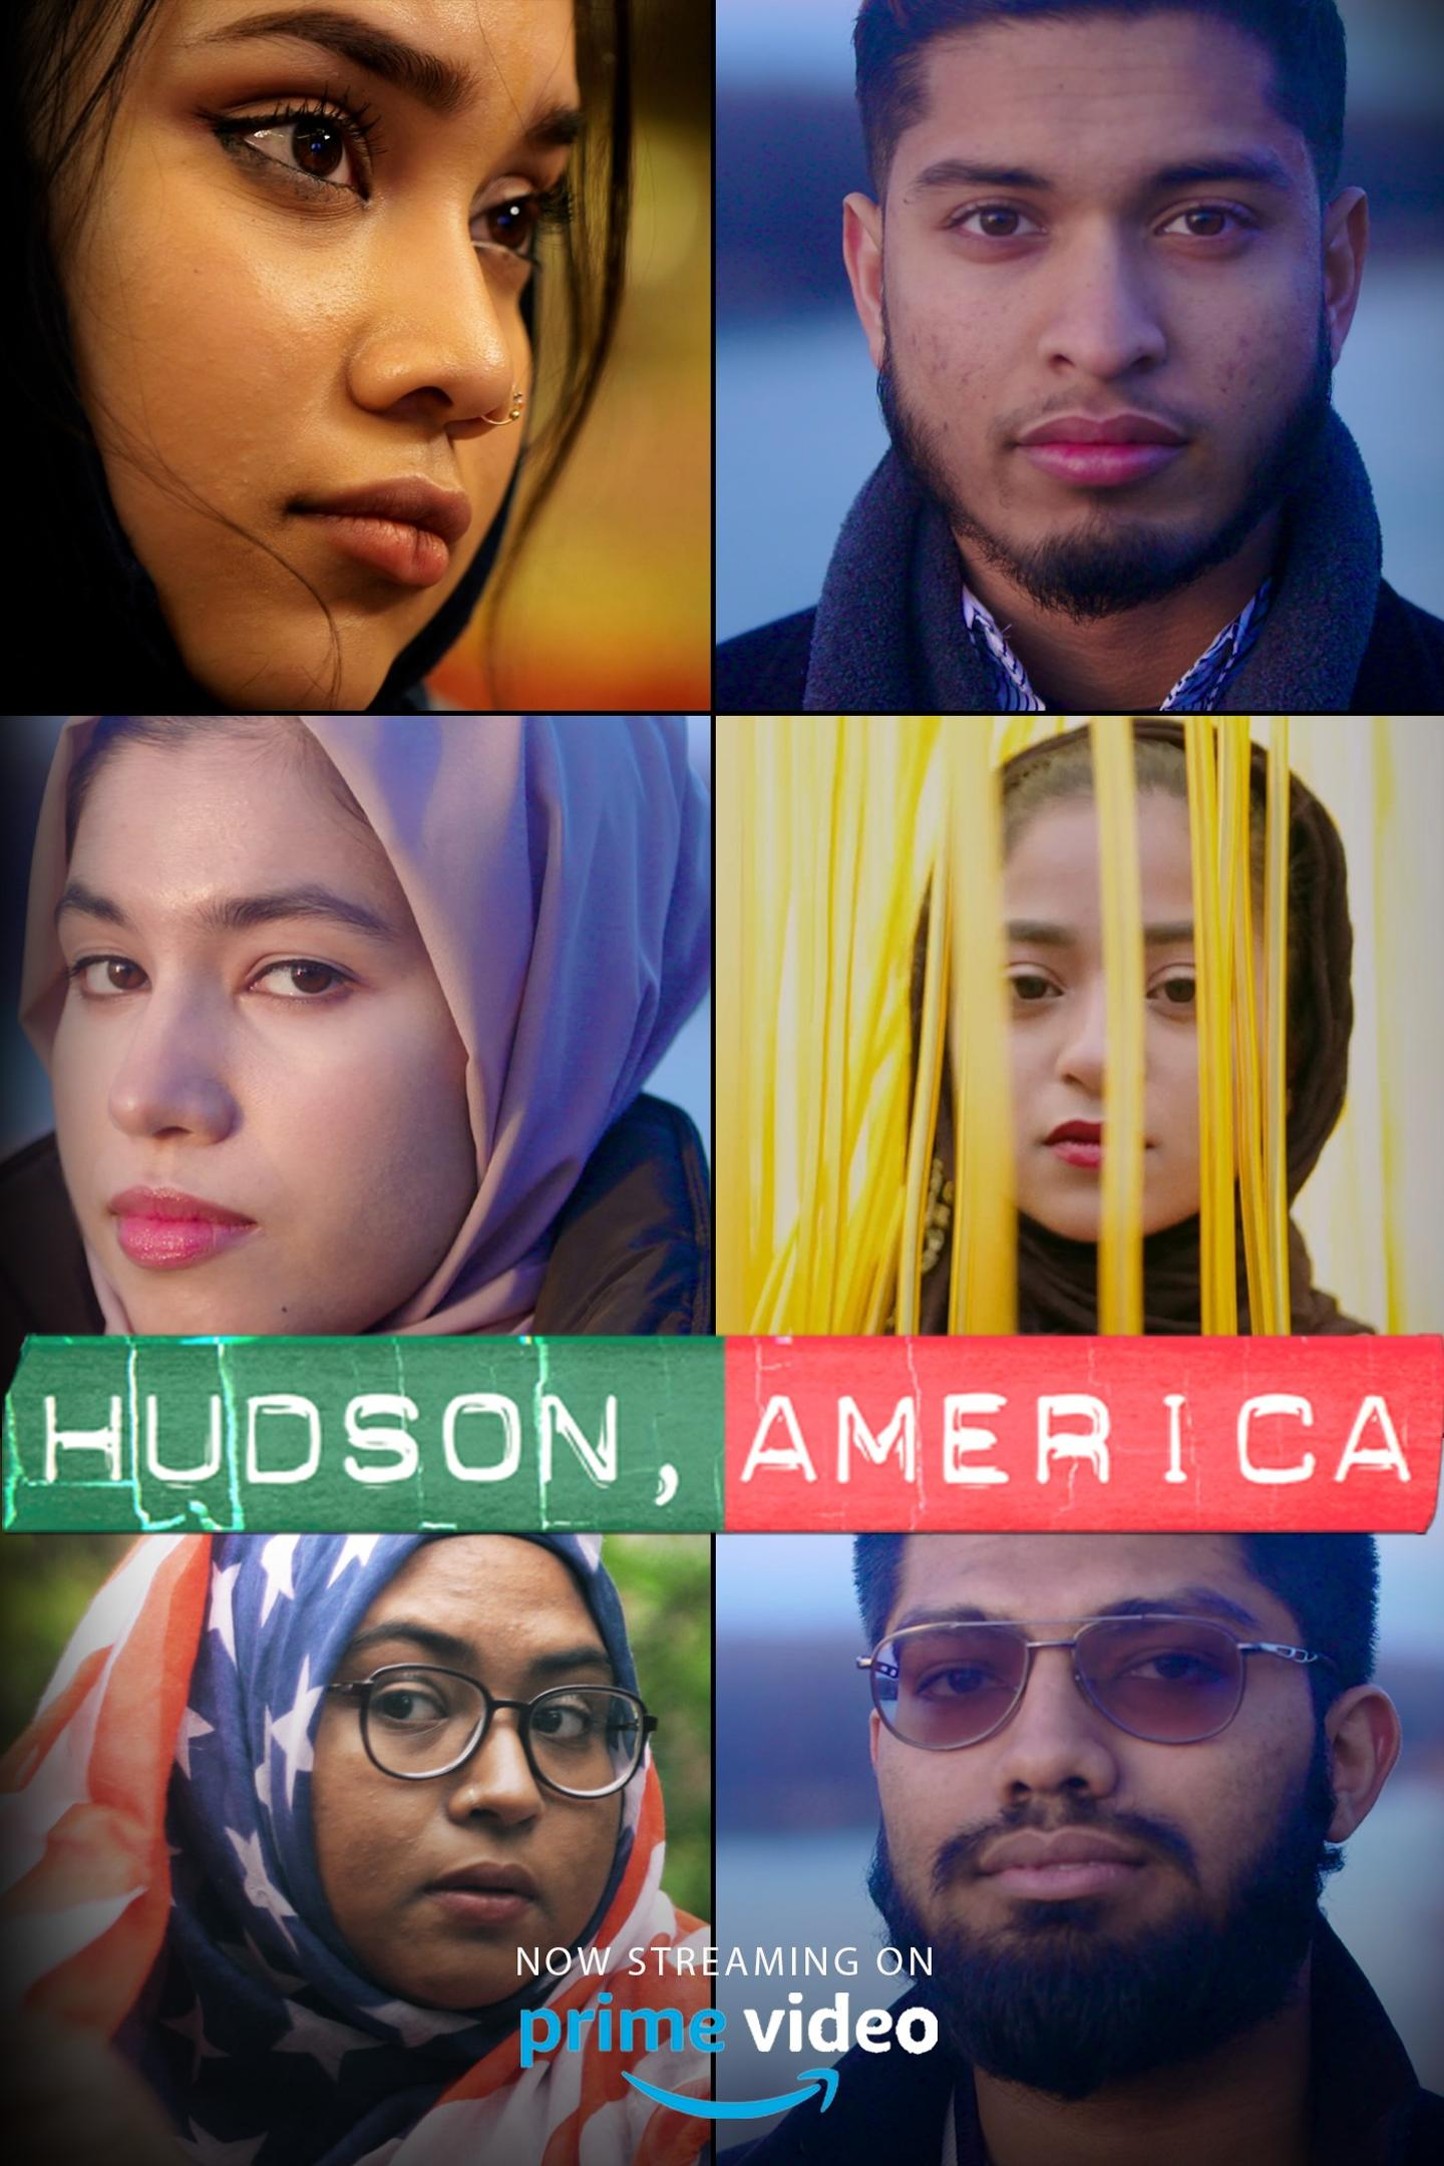 Hudson, America Documentary Now on Streaming Platforms